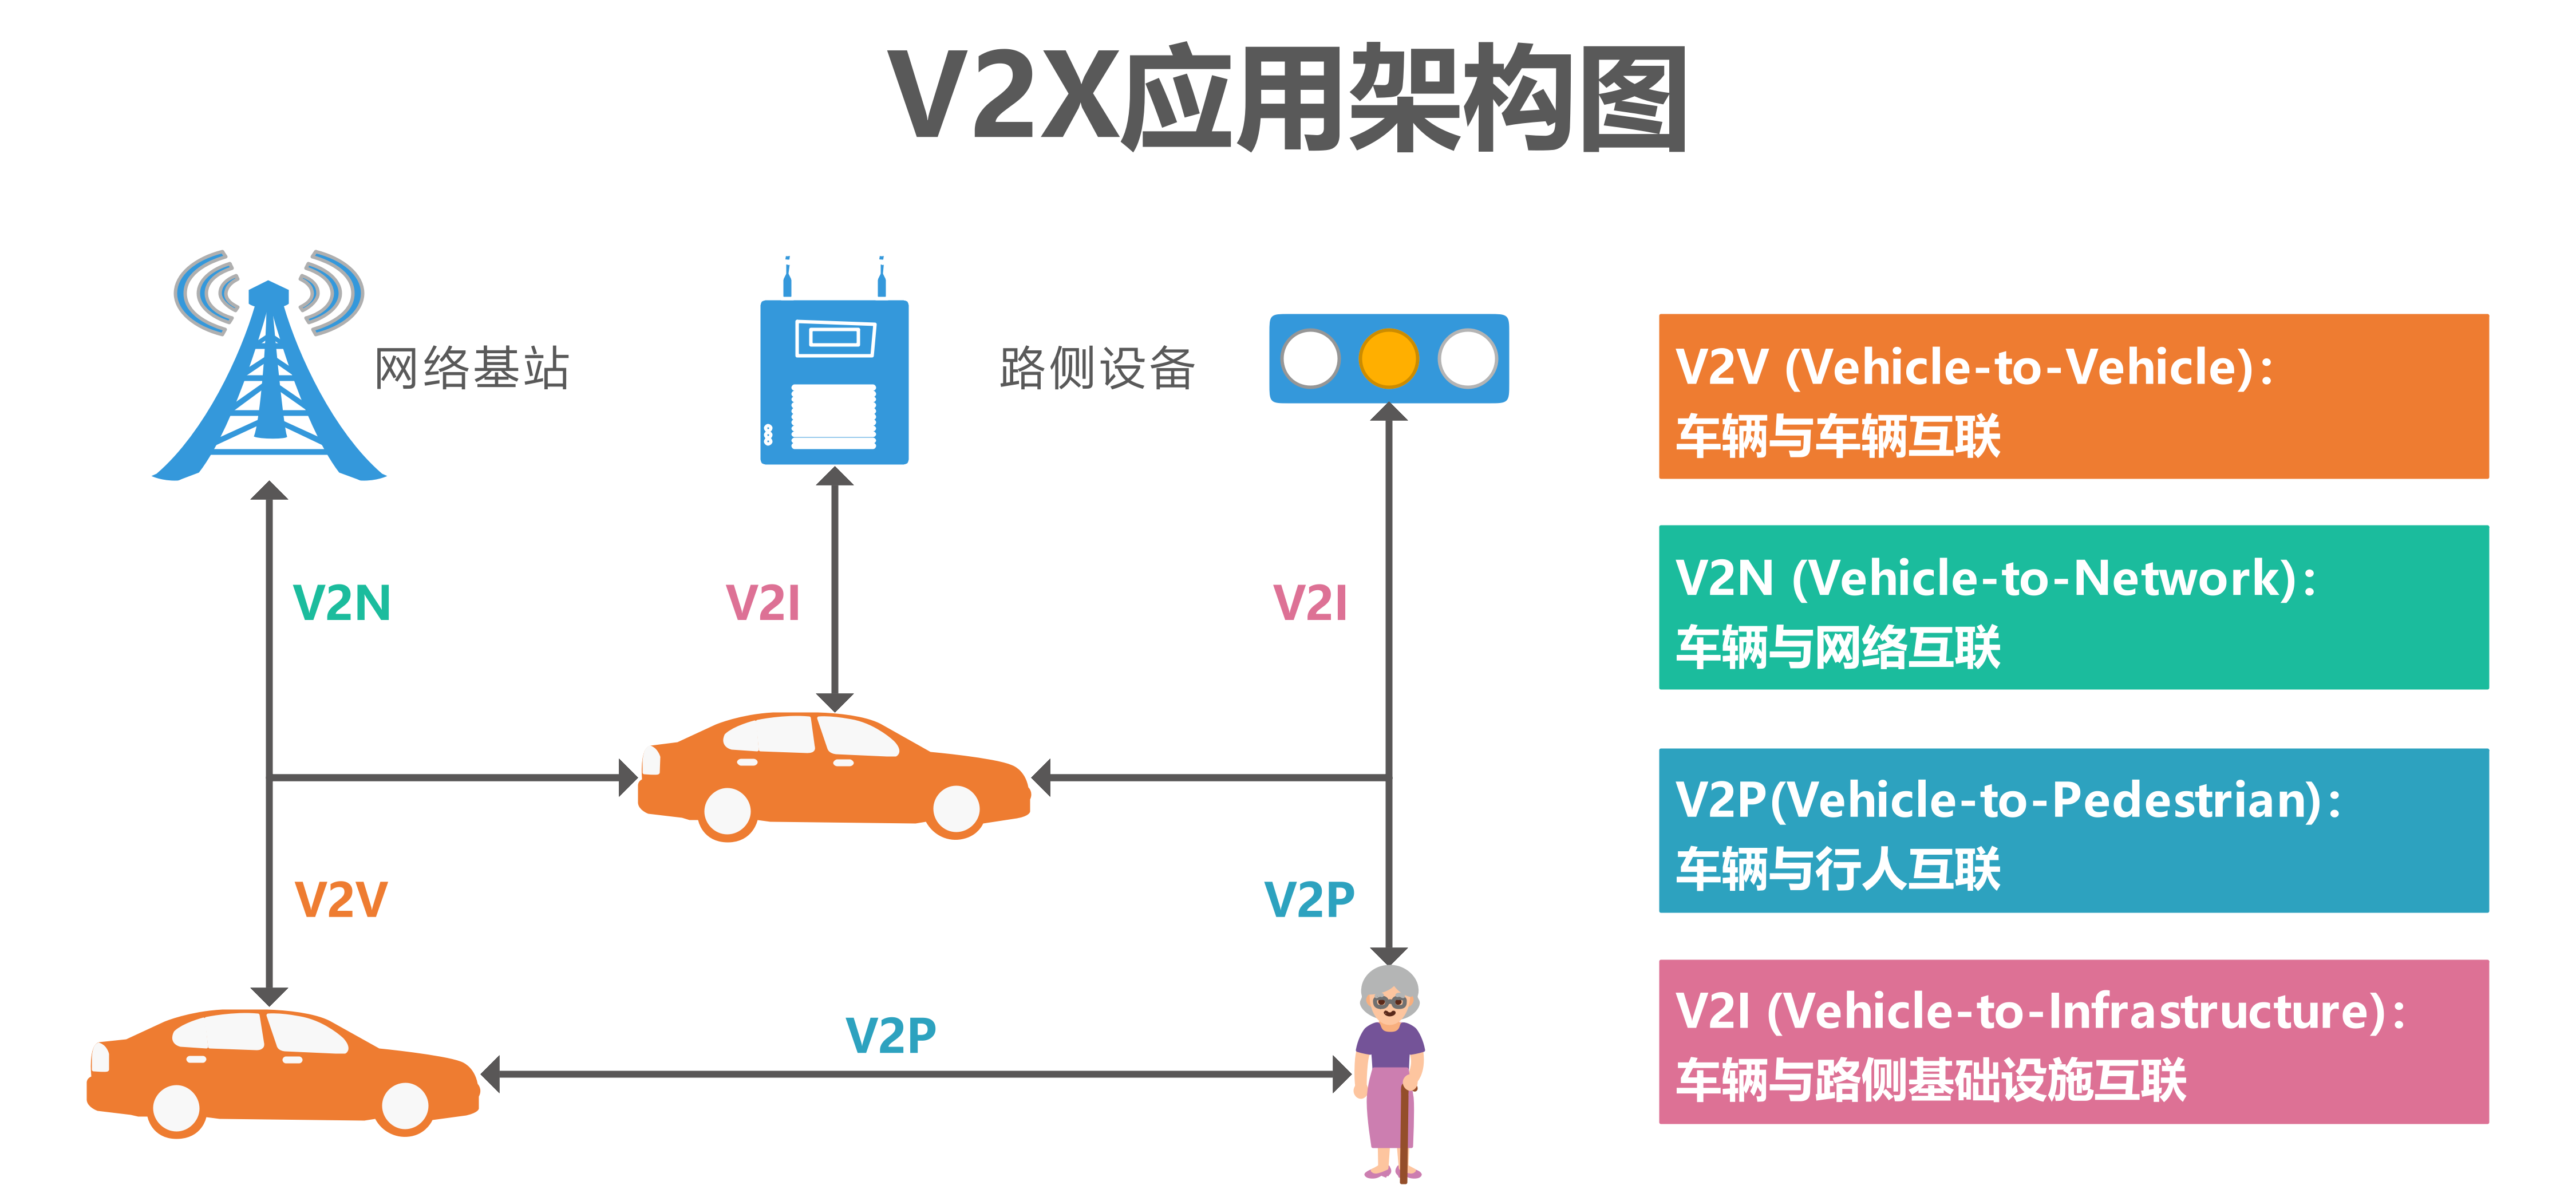 V2X应用架构图.png